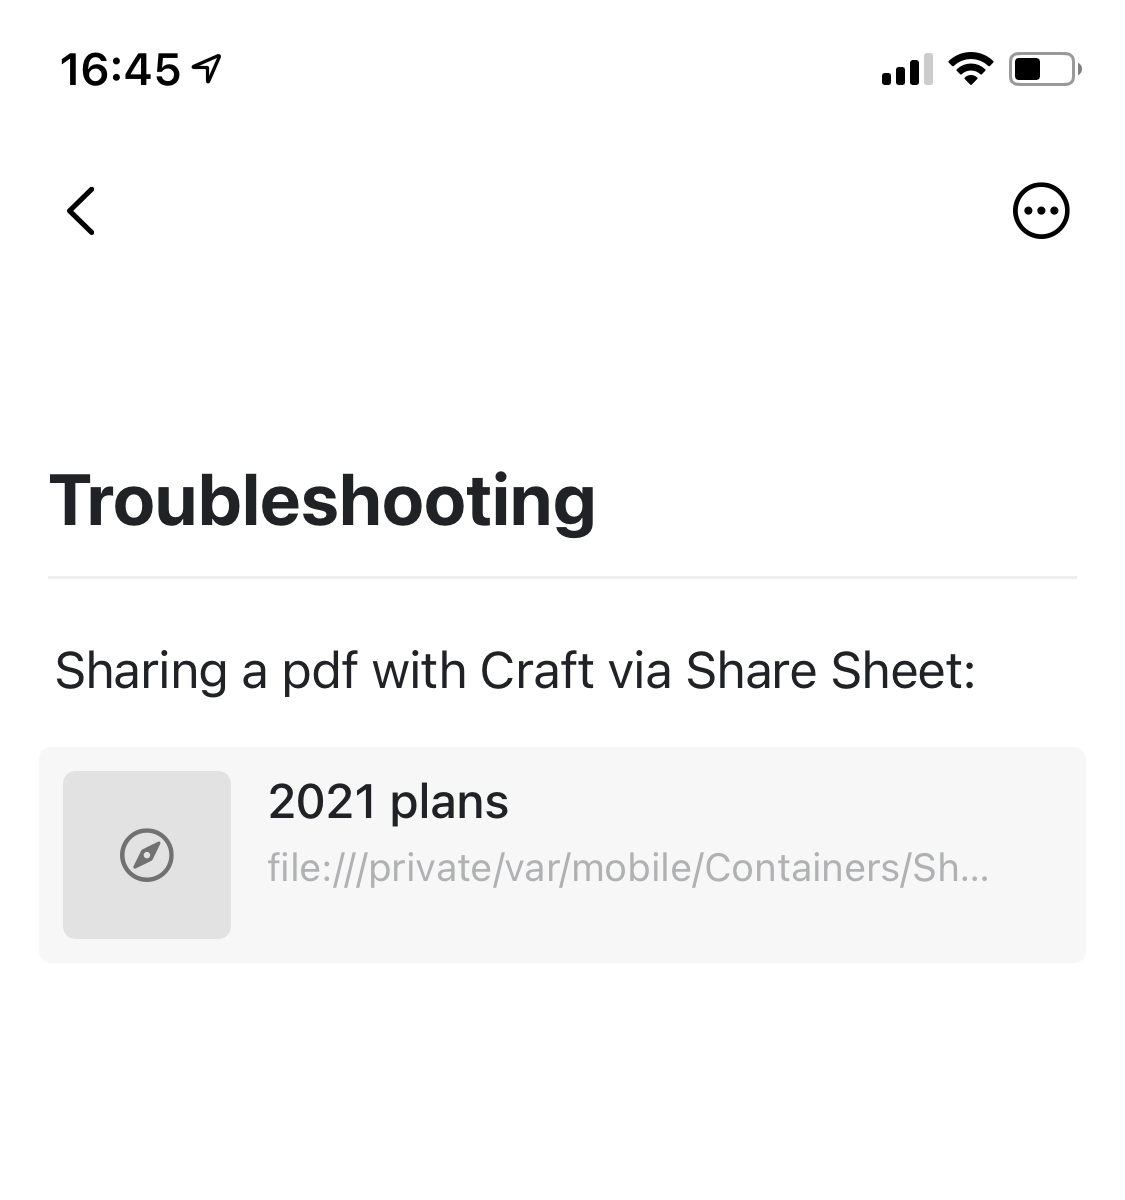 share_sheet.png